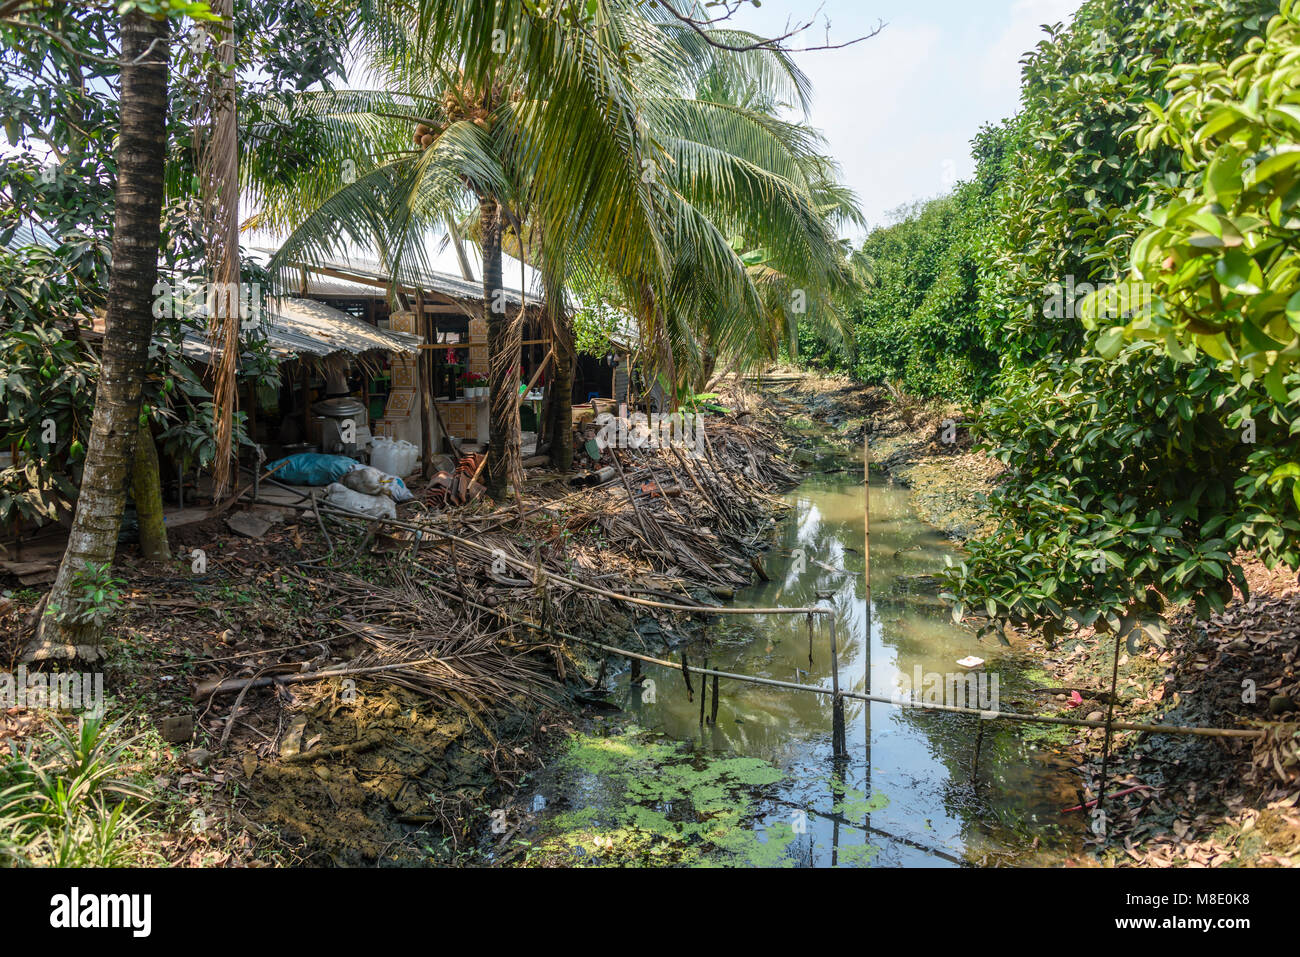 Irrigation stream running at the edge of a jungle village, Meekong Delta, Vietnam Stock Photo